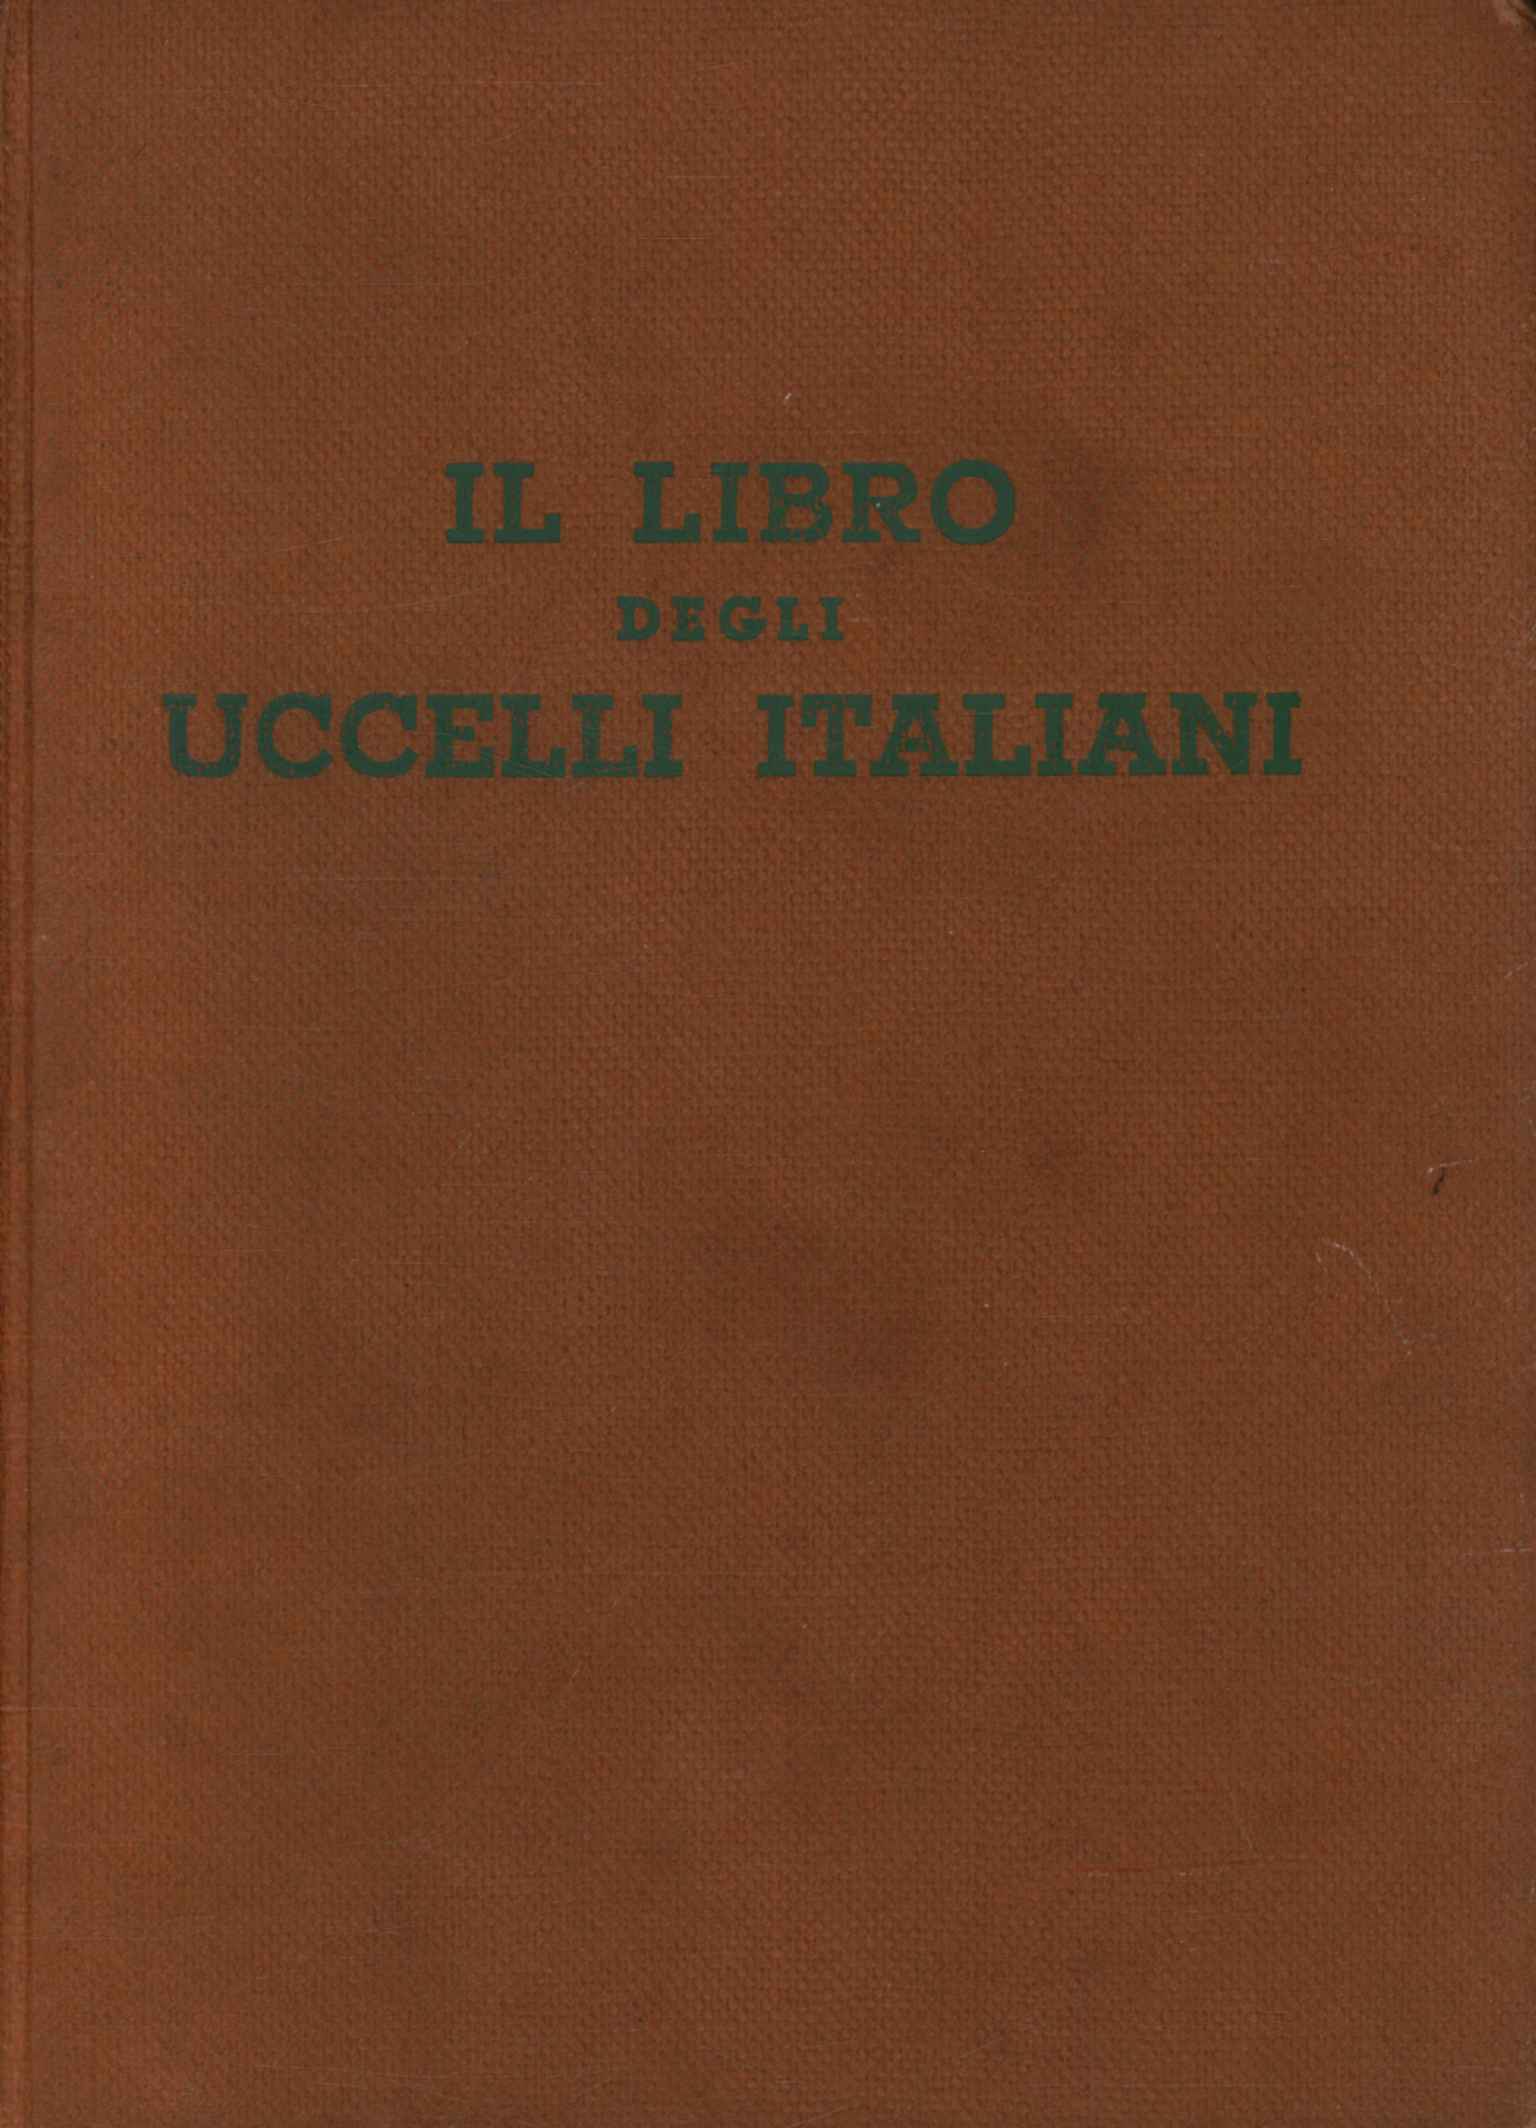 The book of Italian birds